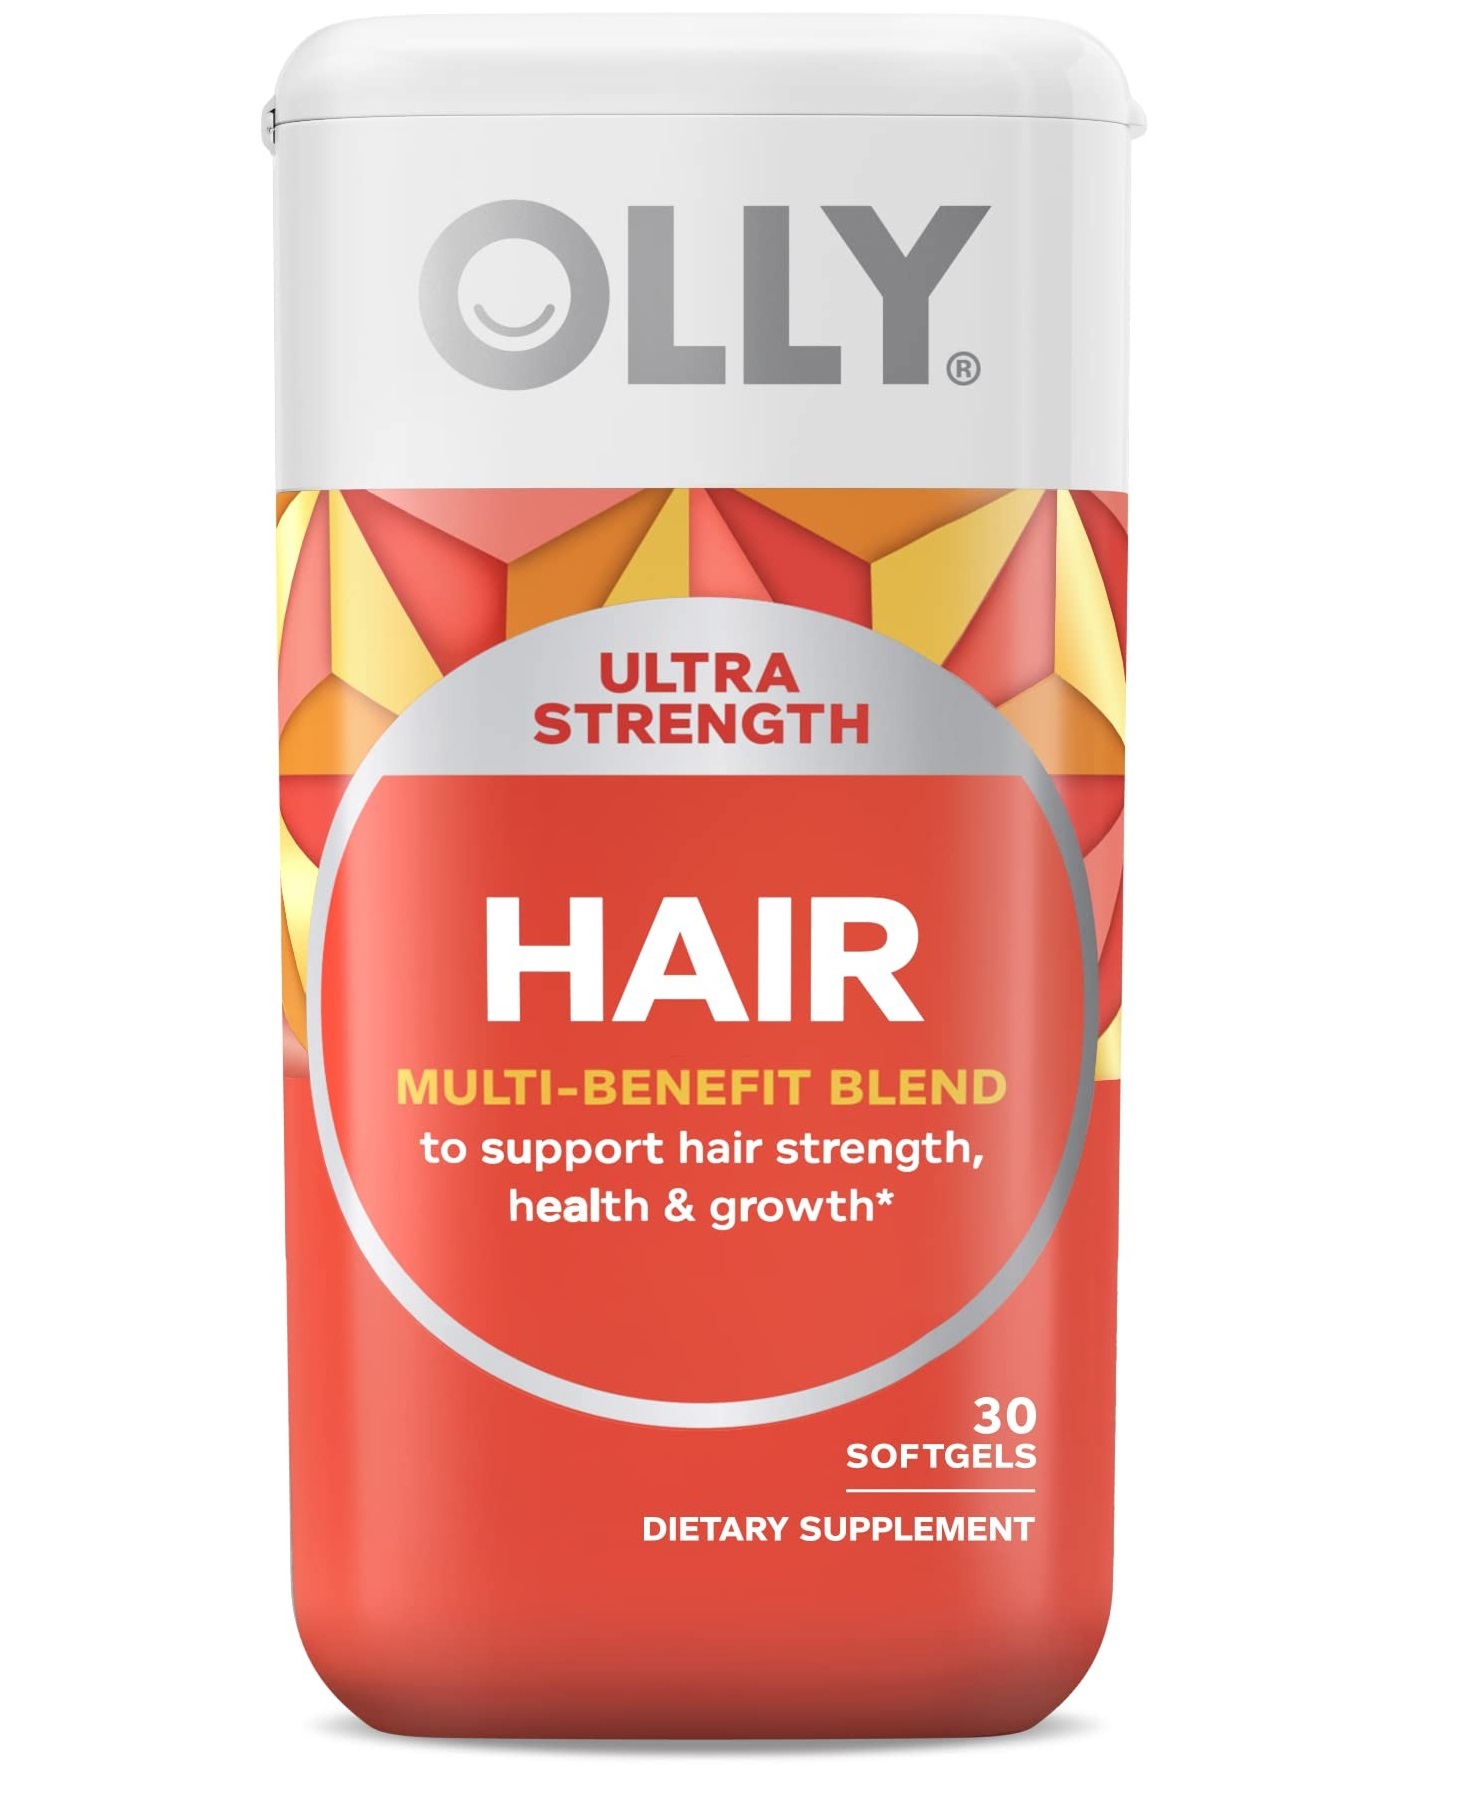 Vien uong cham soc toc tay Olly Hair Ultra 30 Softgels